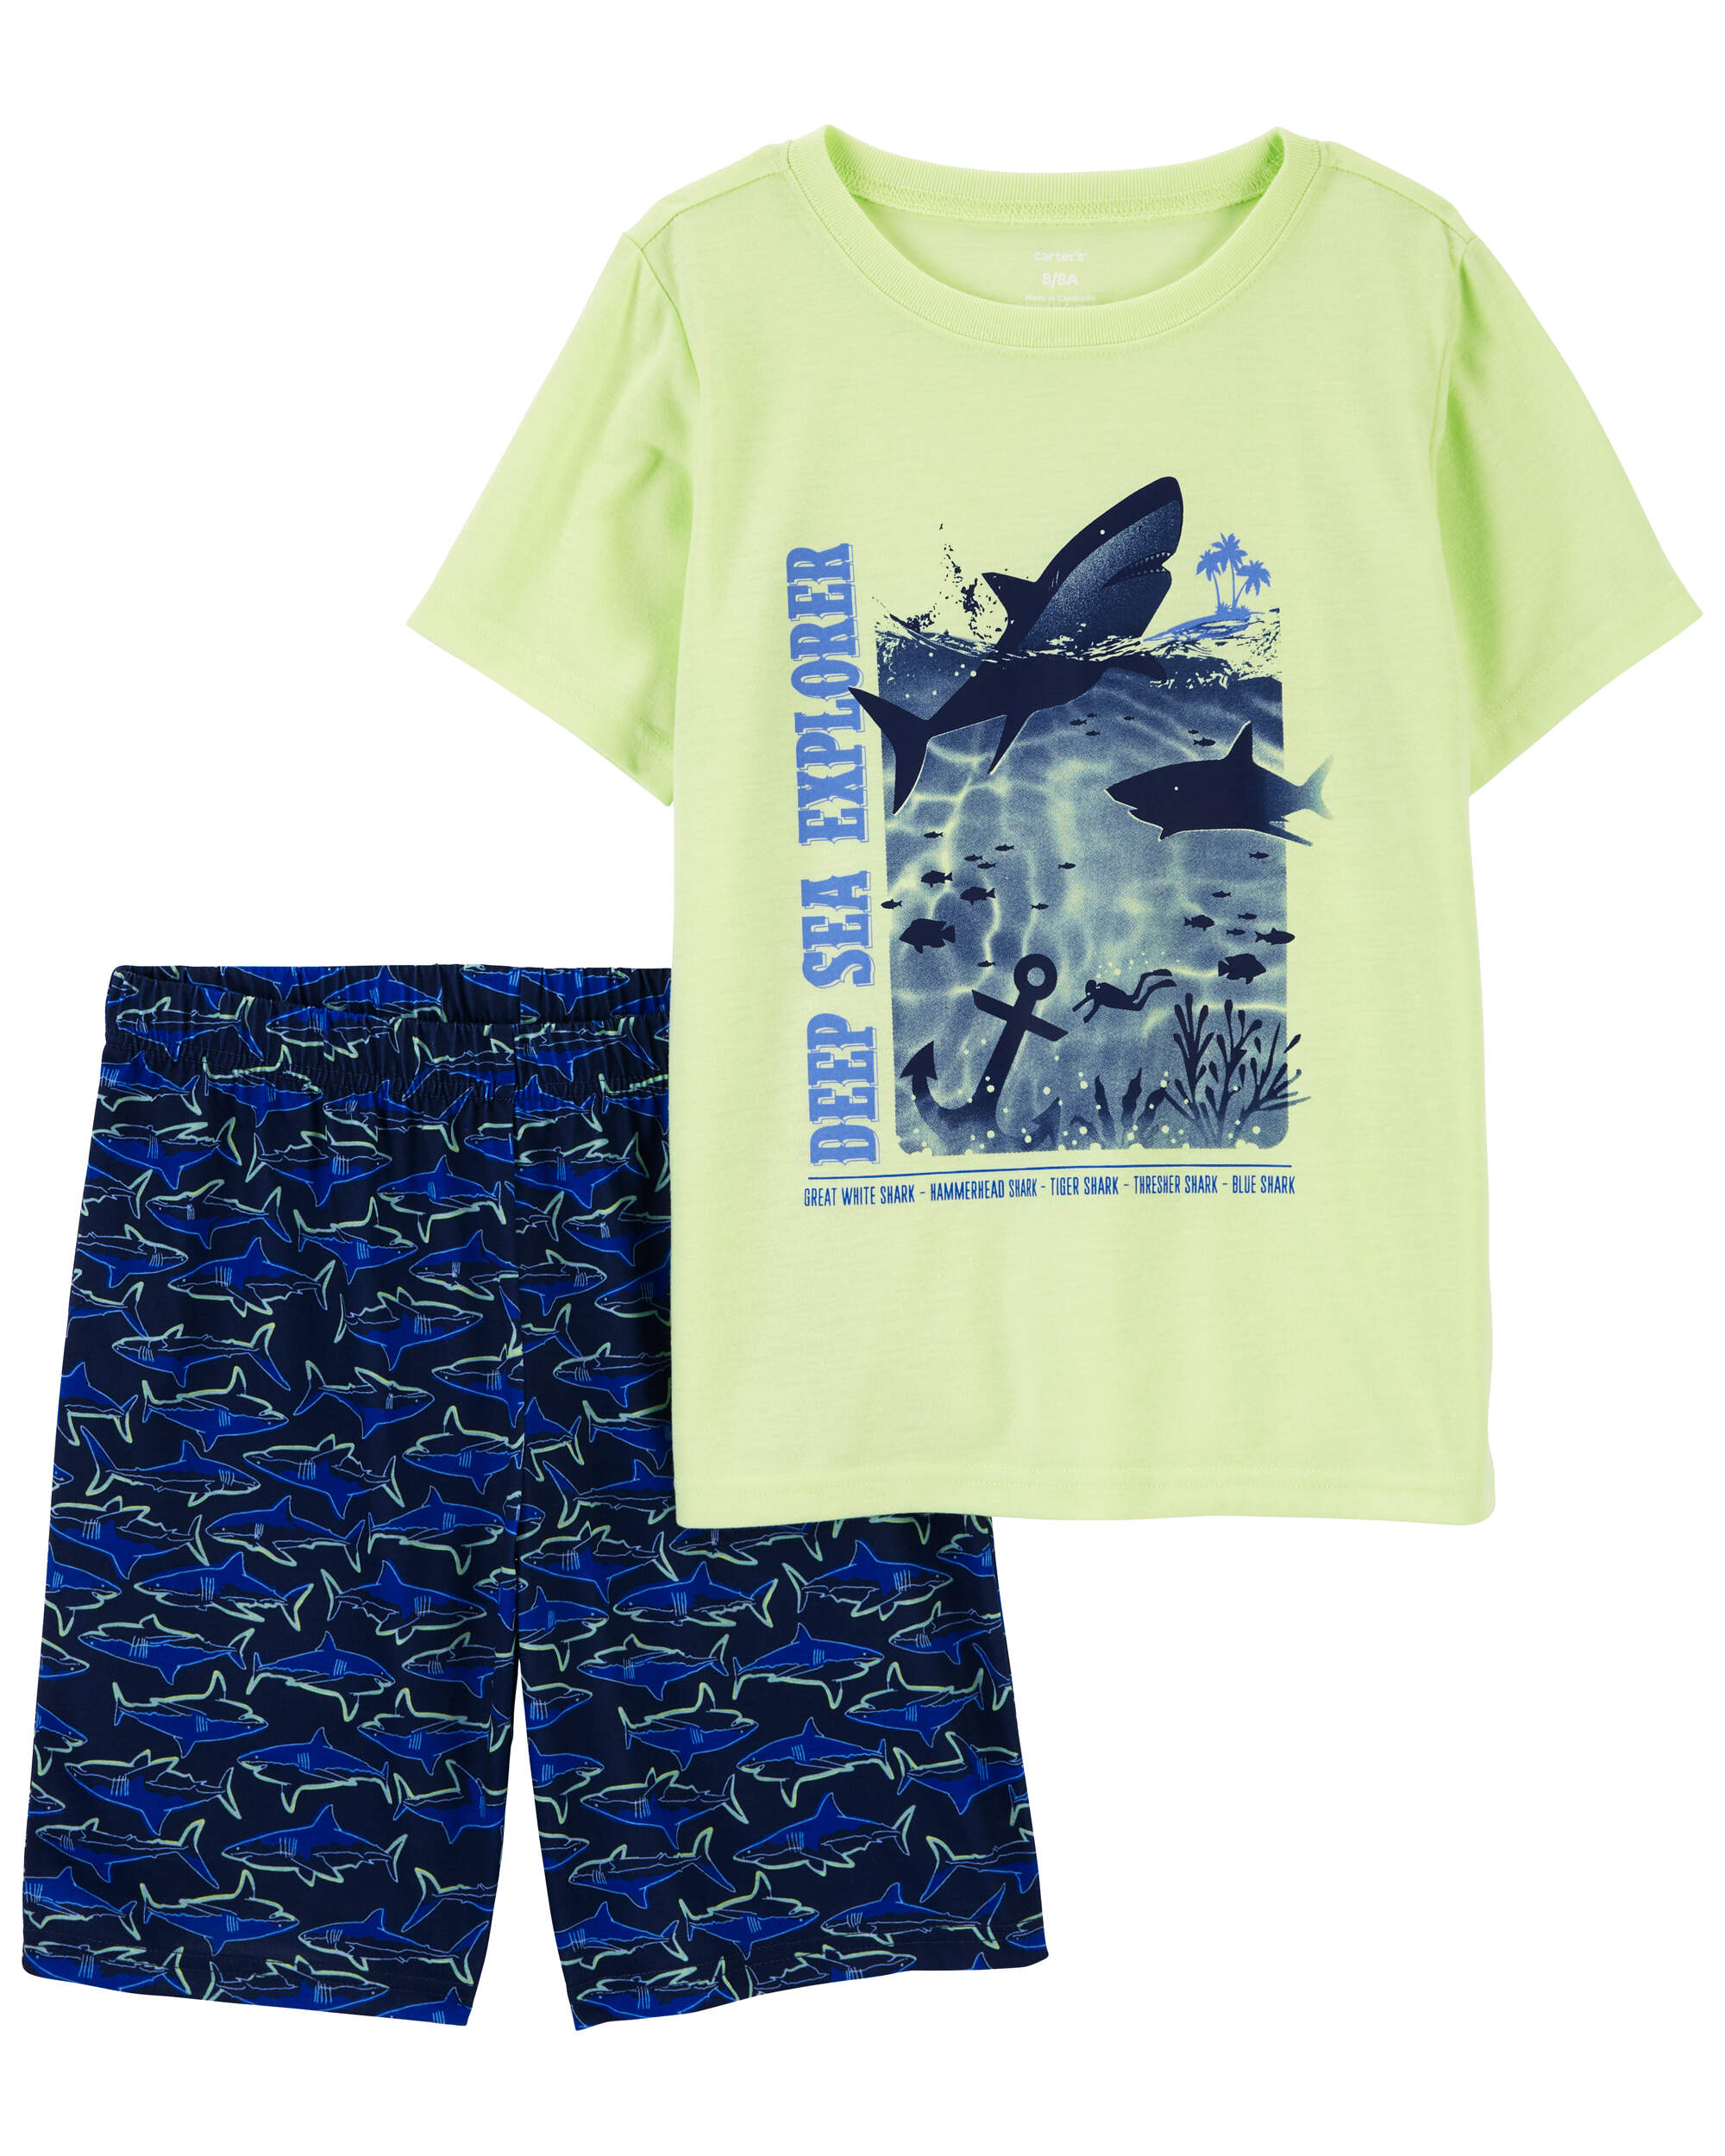 2-Piece Shark Loose Fit Pyjama Set